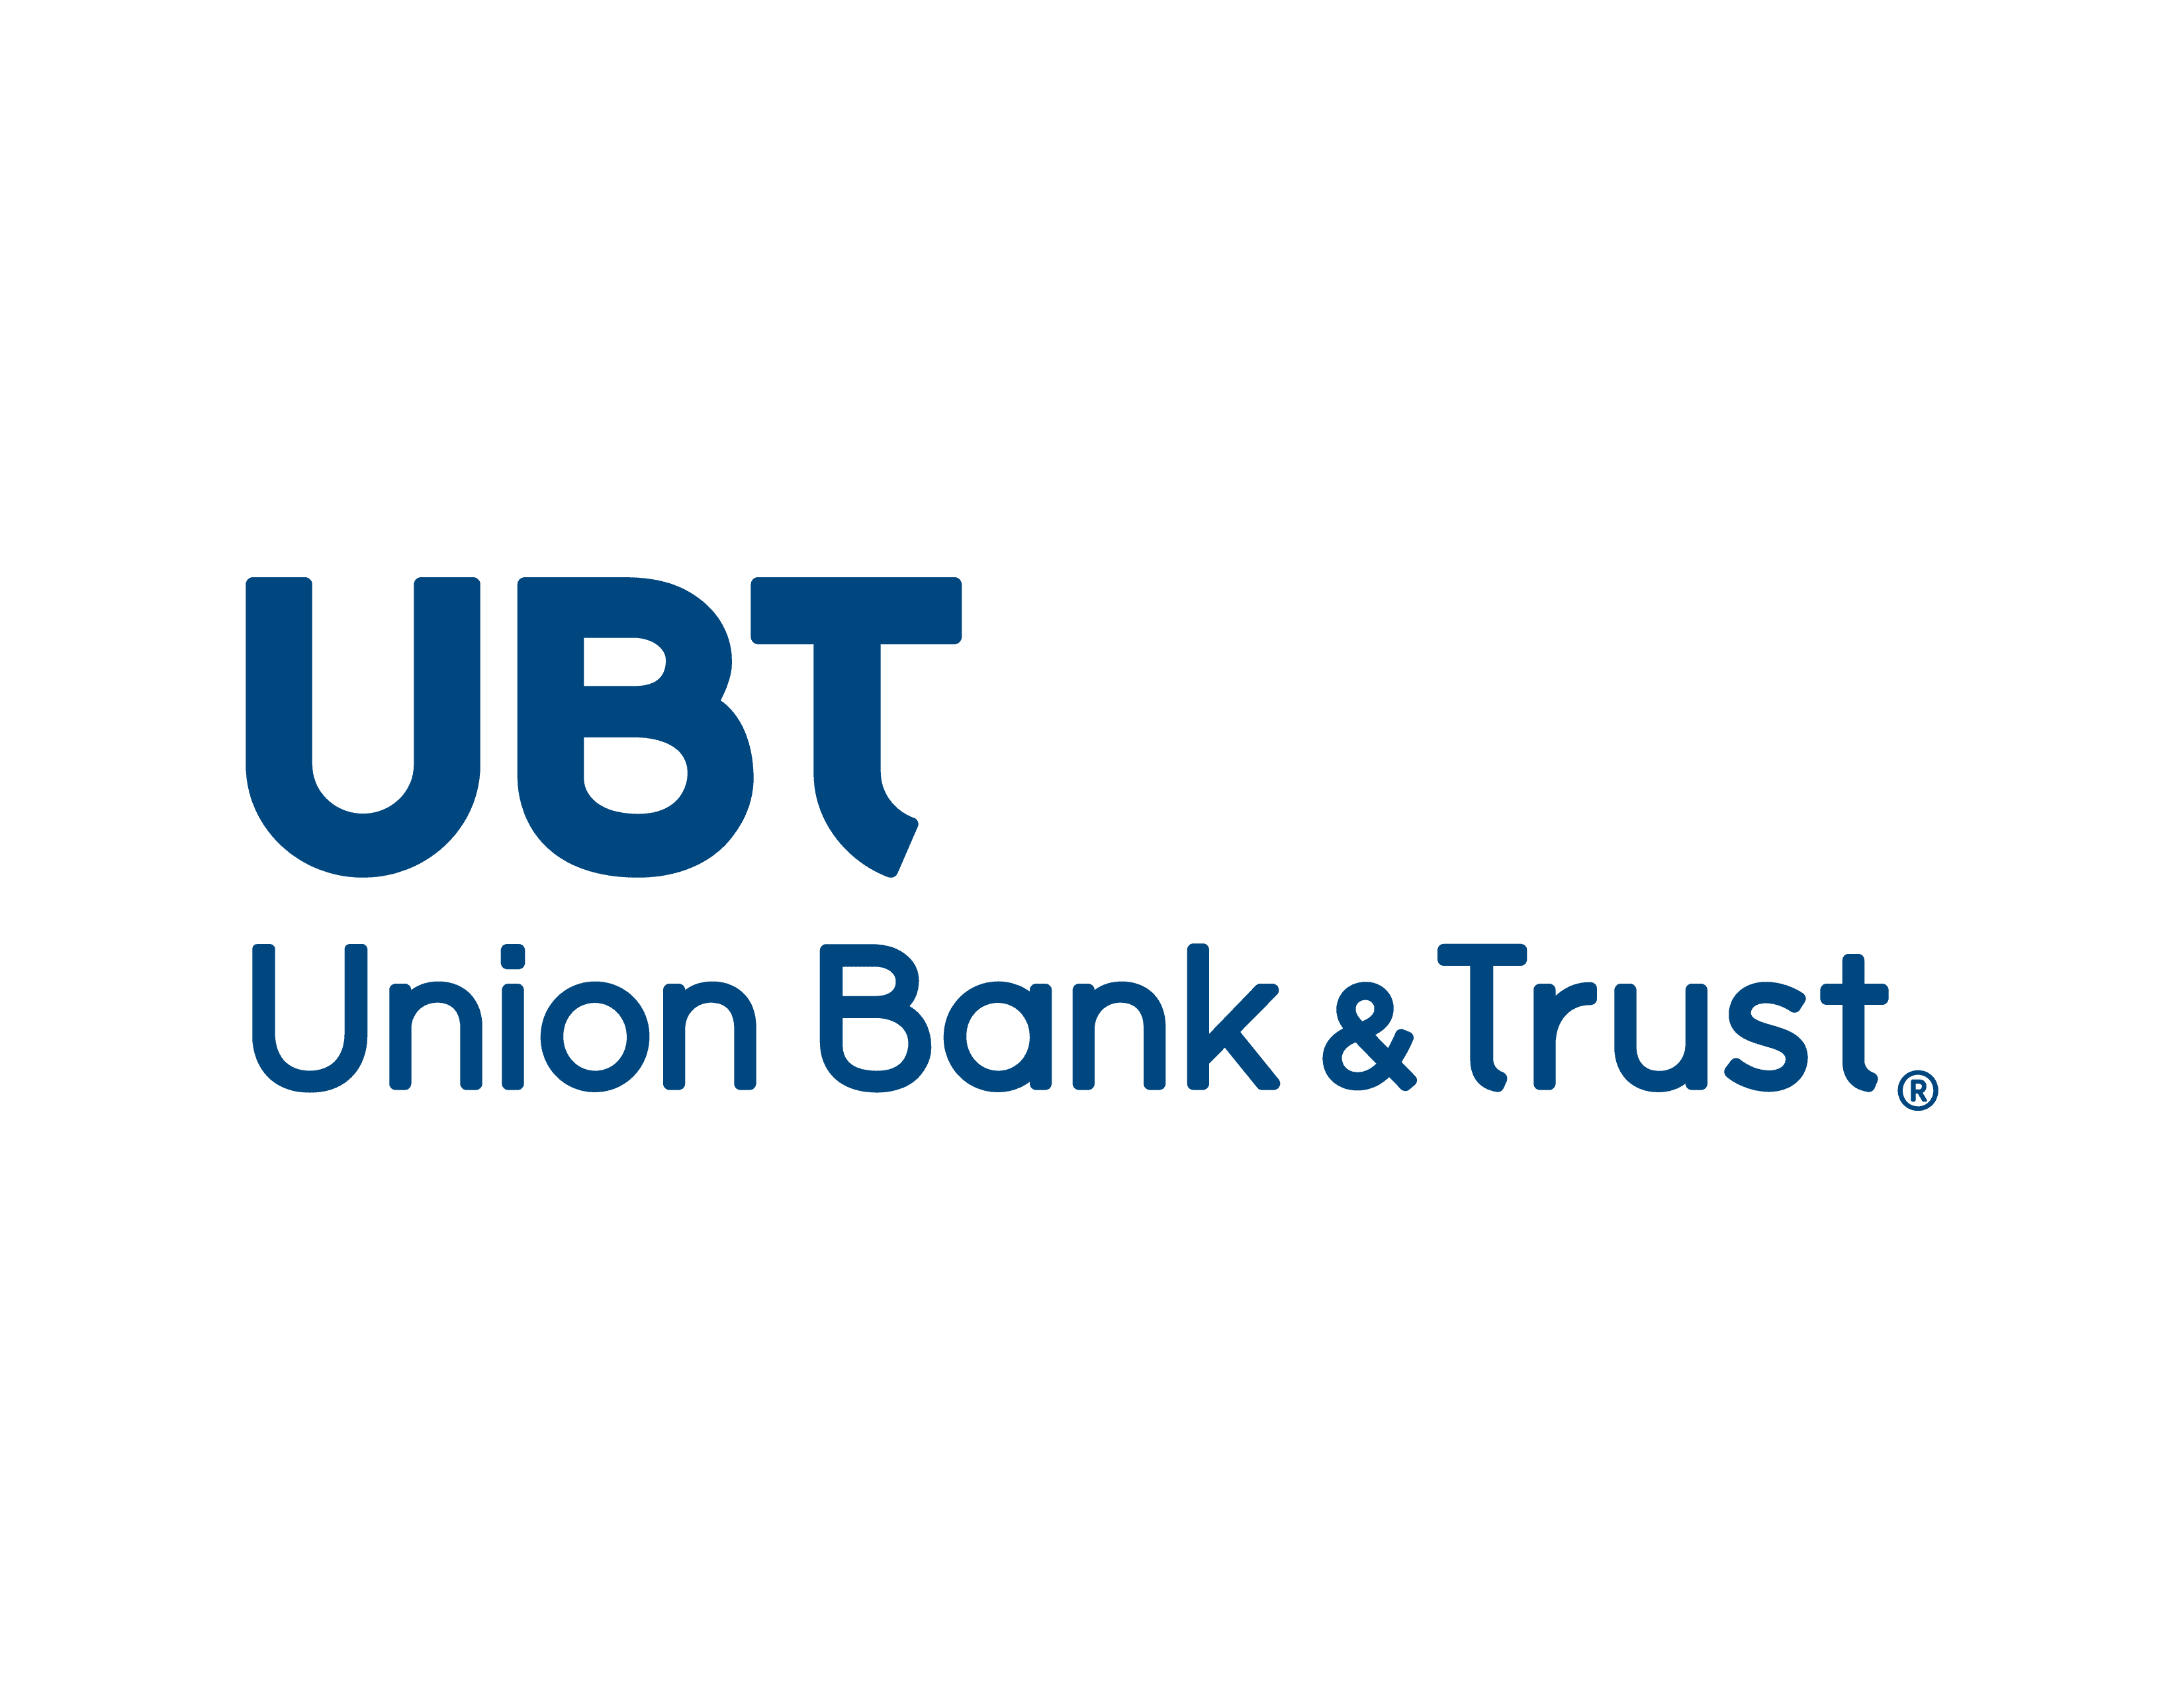 Union Bank & Trust